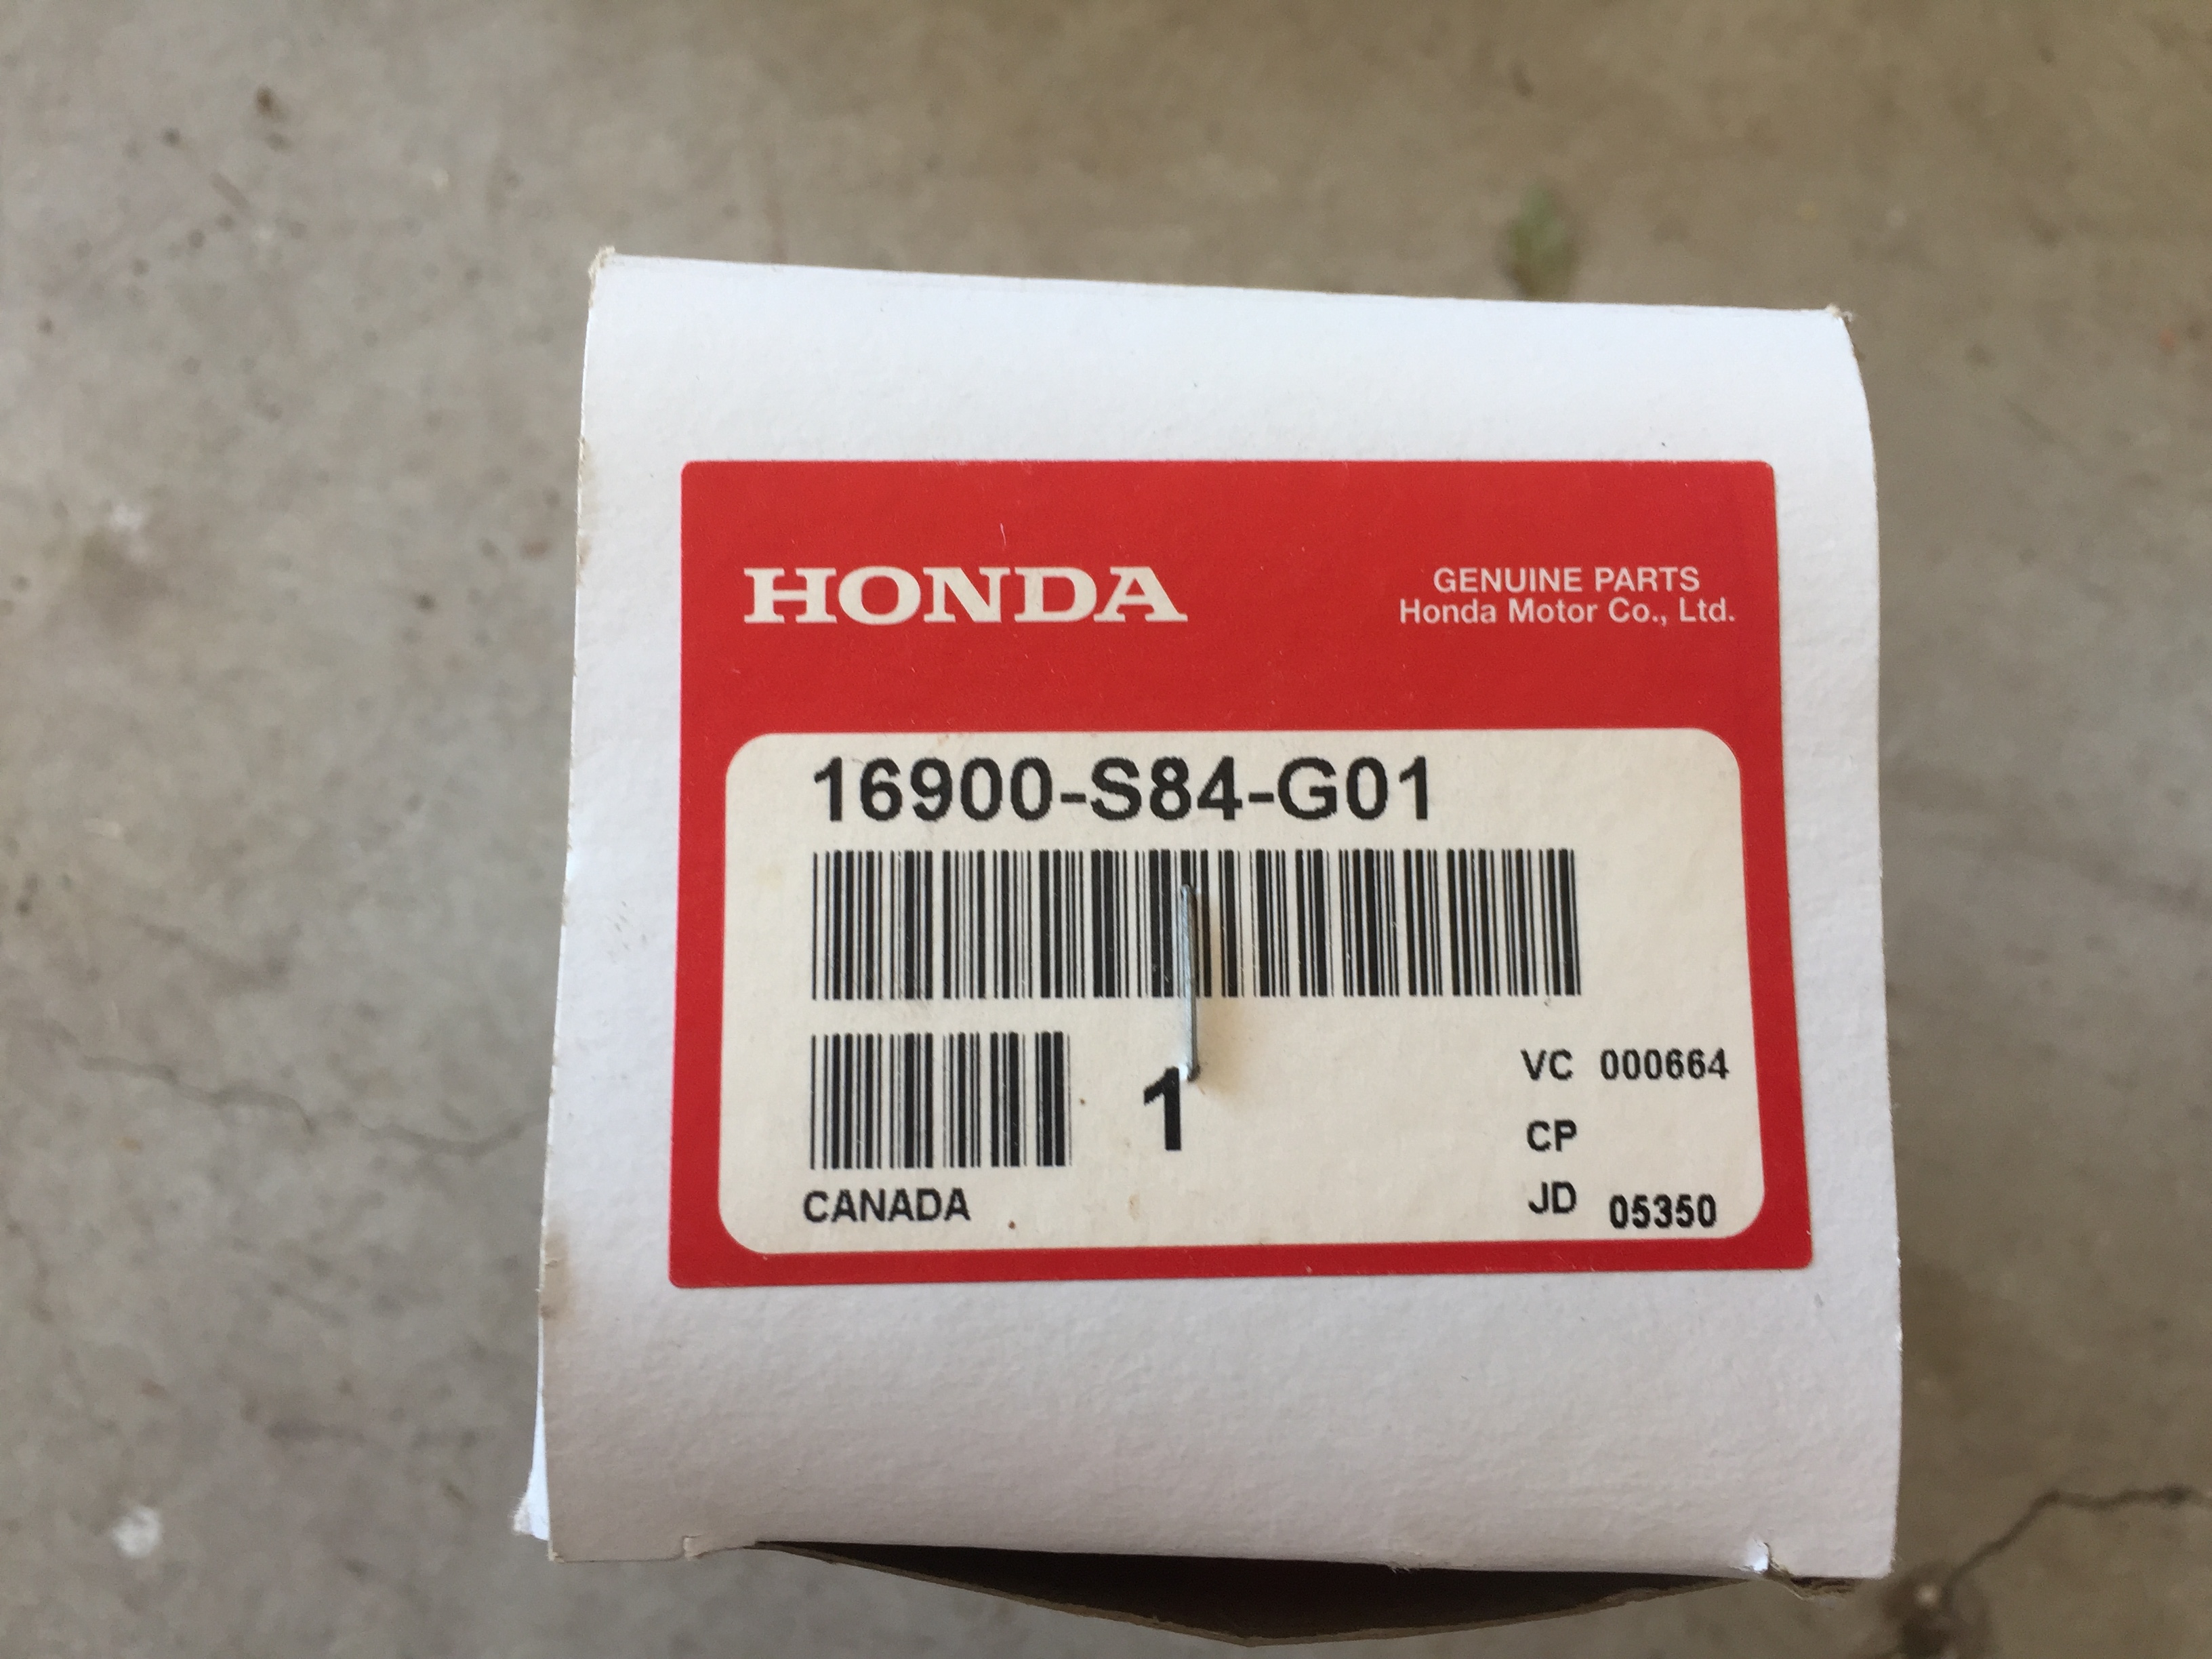 Honda OEM Part 15154-425-000 